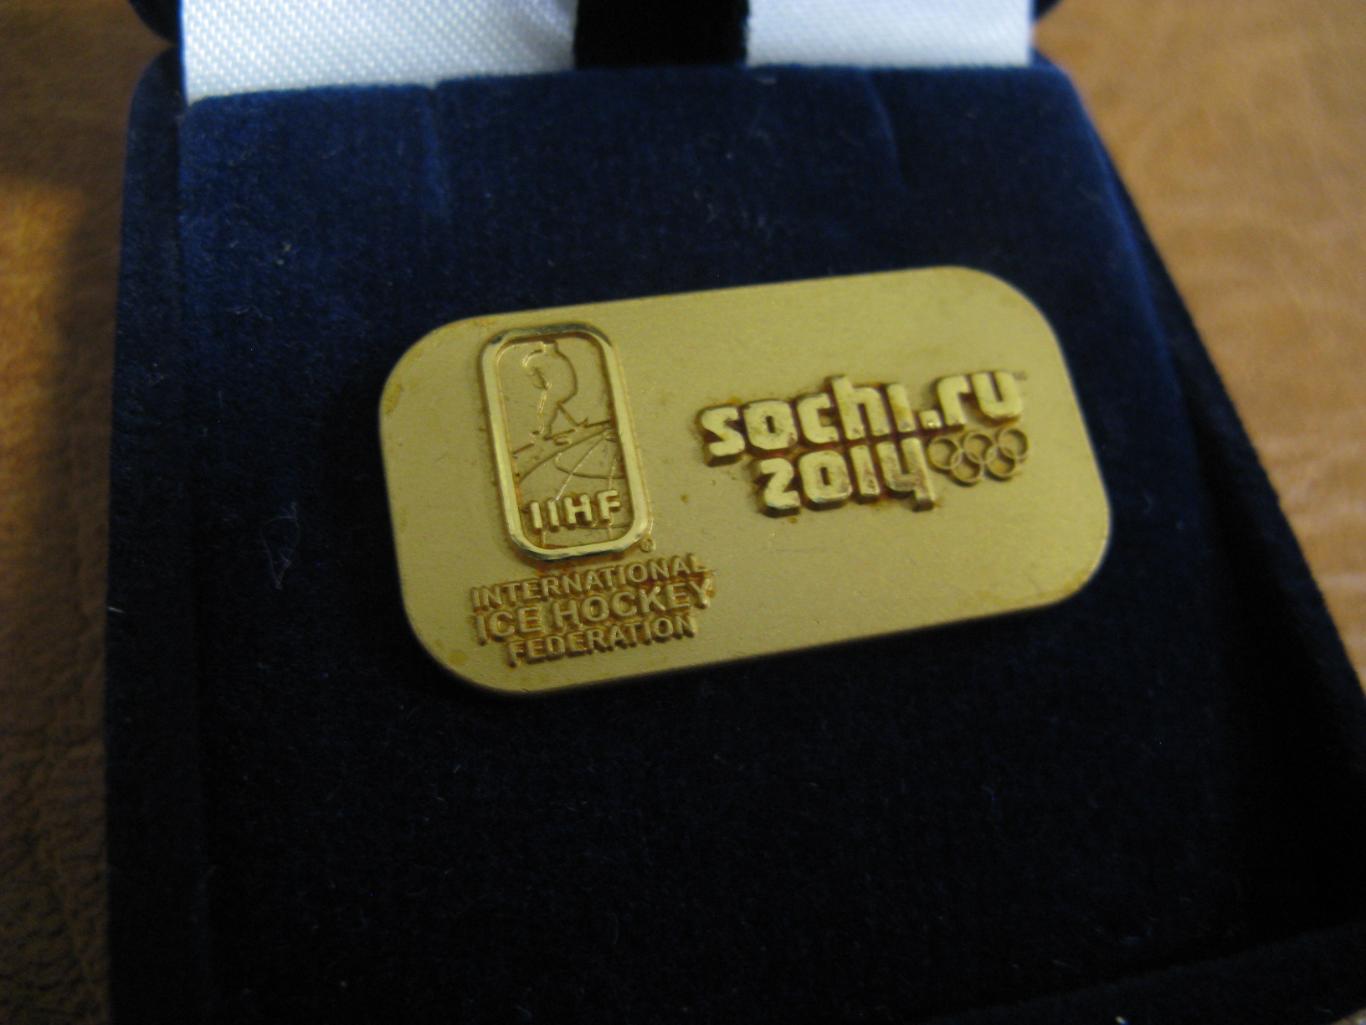 IIHF международная федерация хоккея Олимпиада Сочи 2014 официальный знак 1